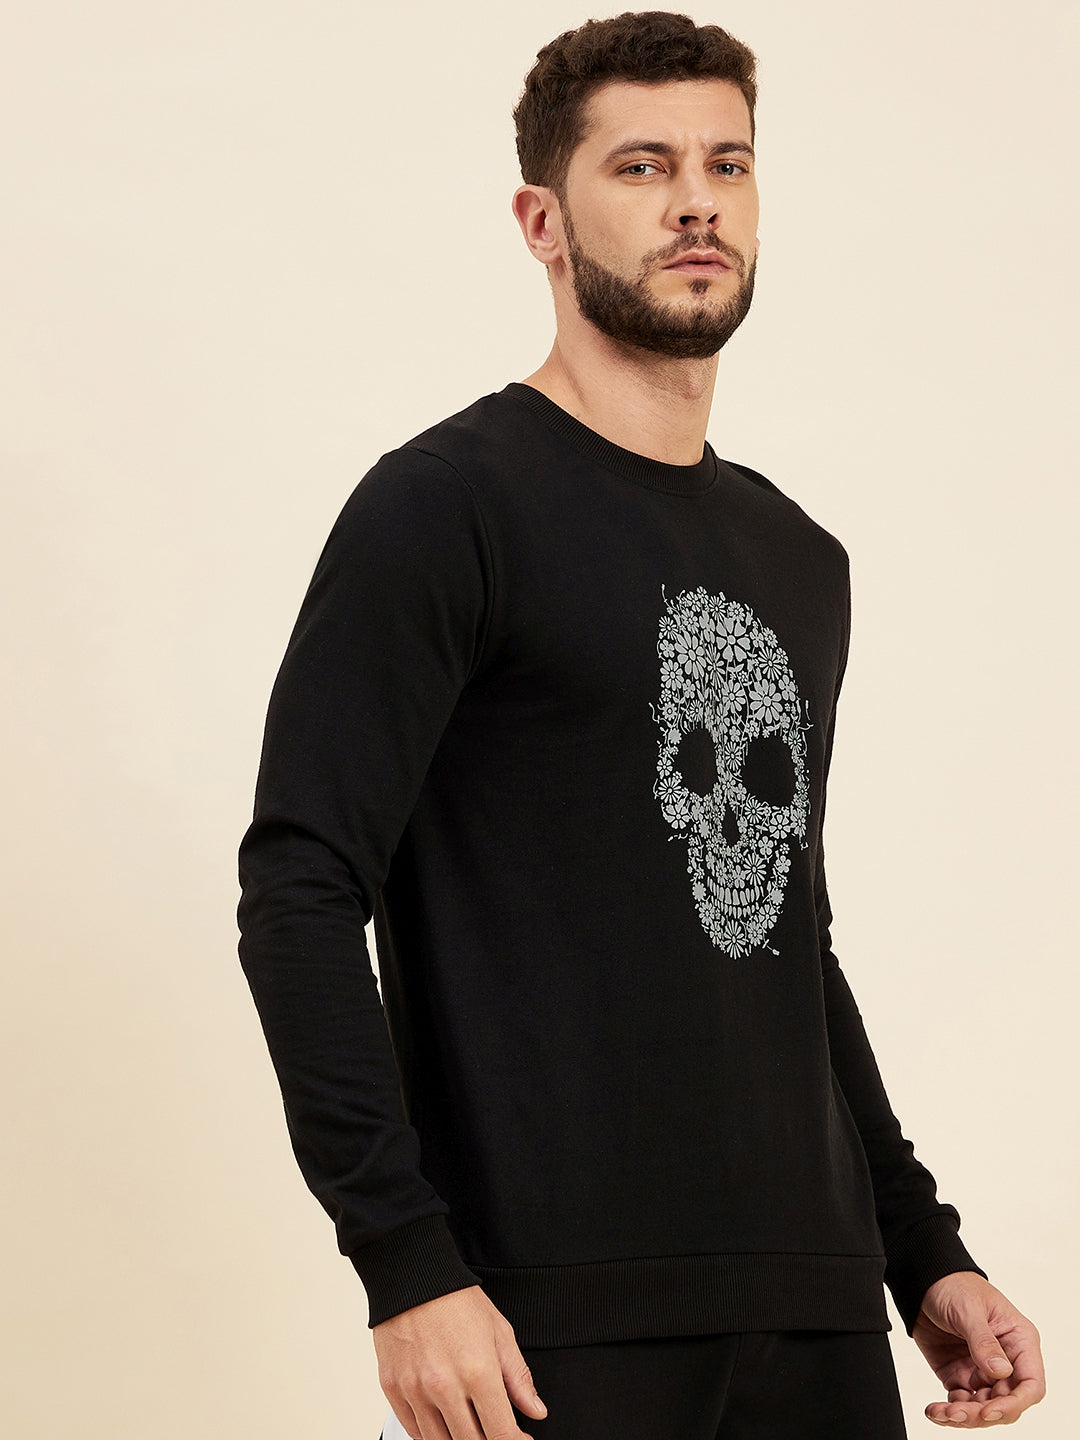 Men Black Floral Skull Print Sweatshirt